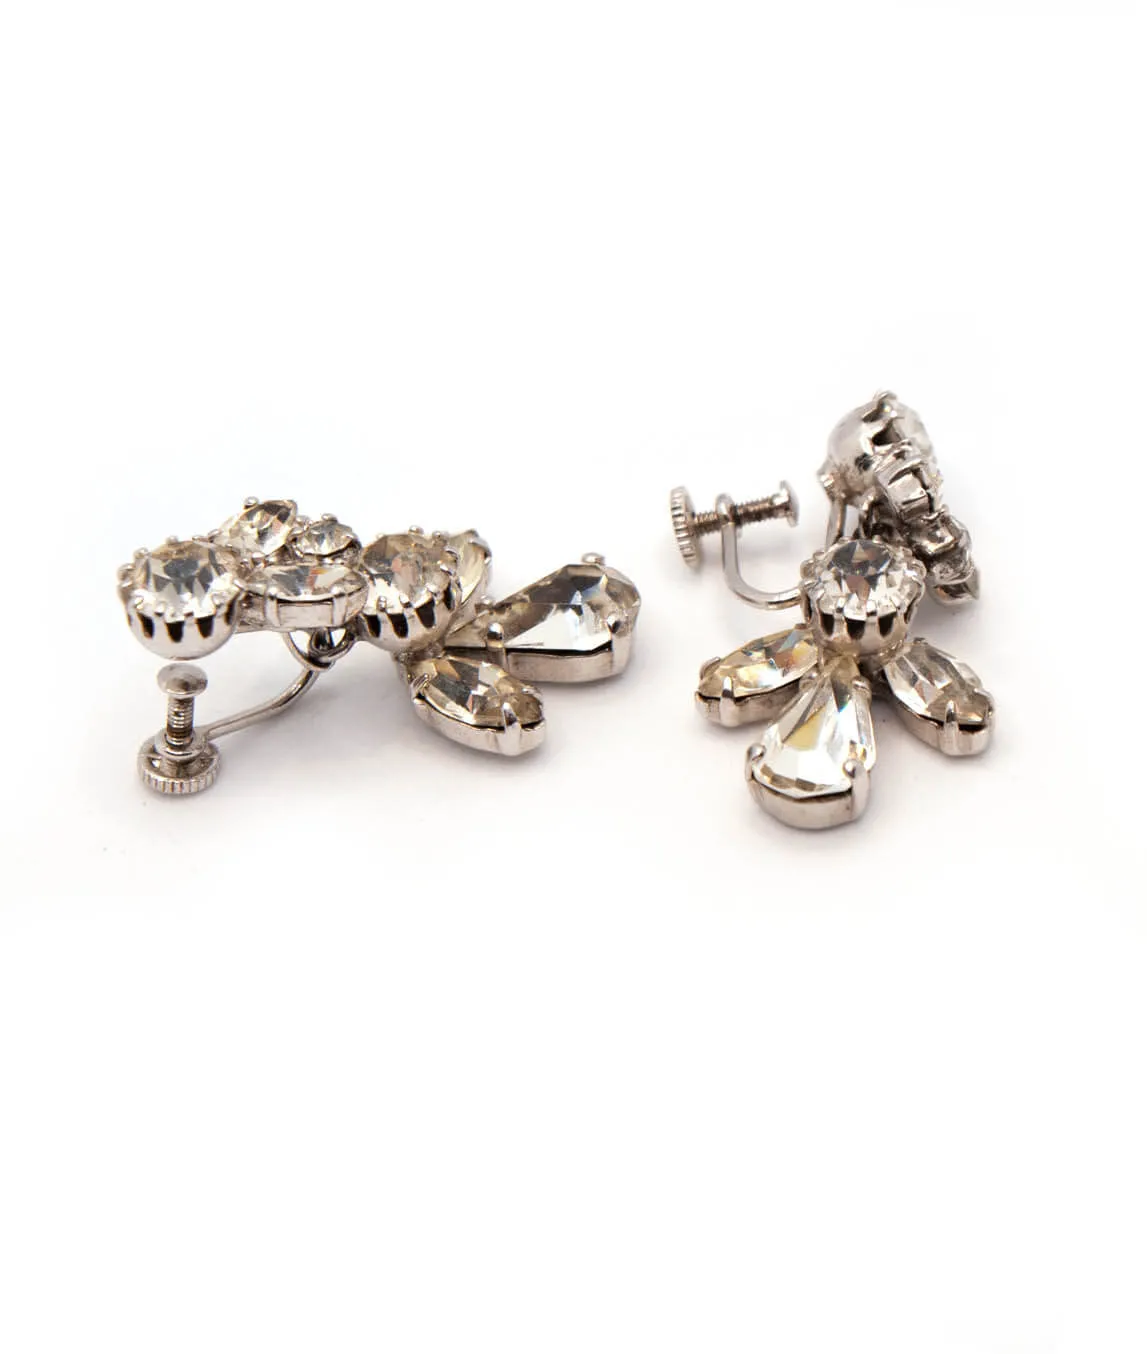 Vintage screw back earrings by Mitchel Maer